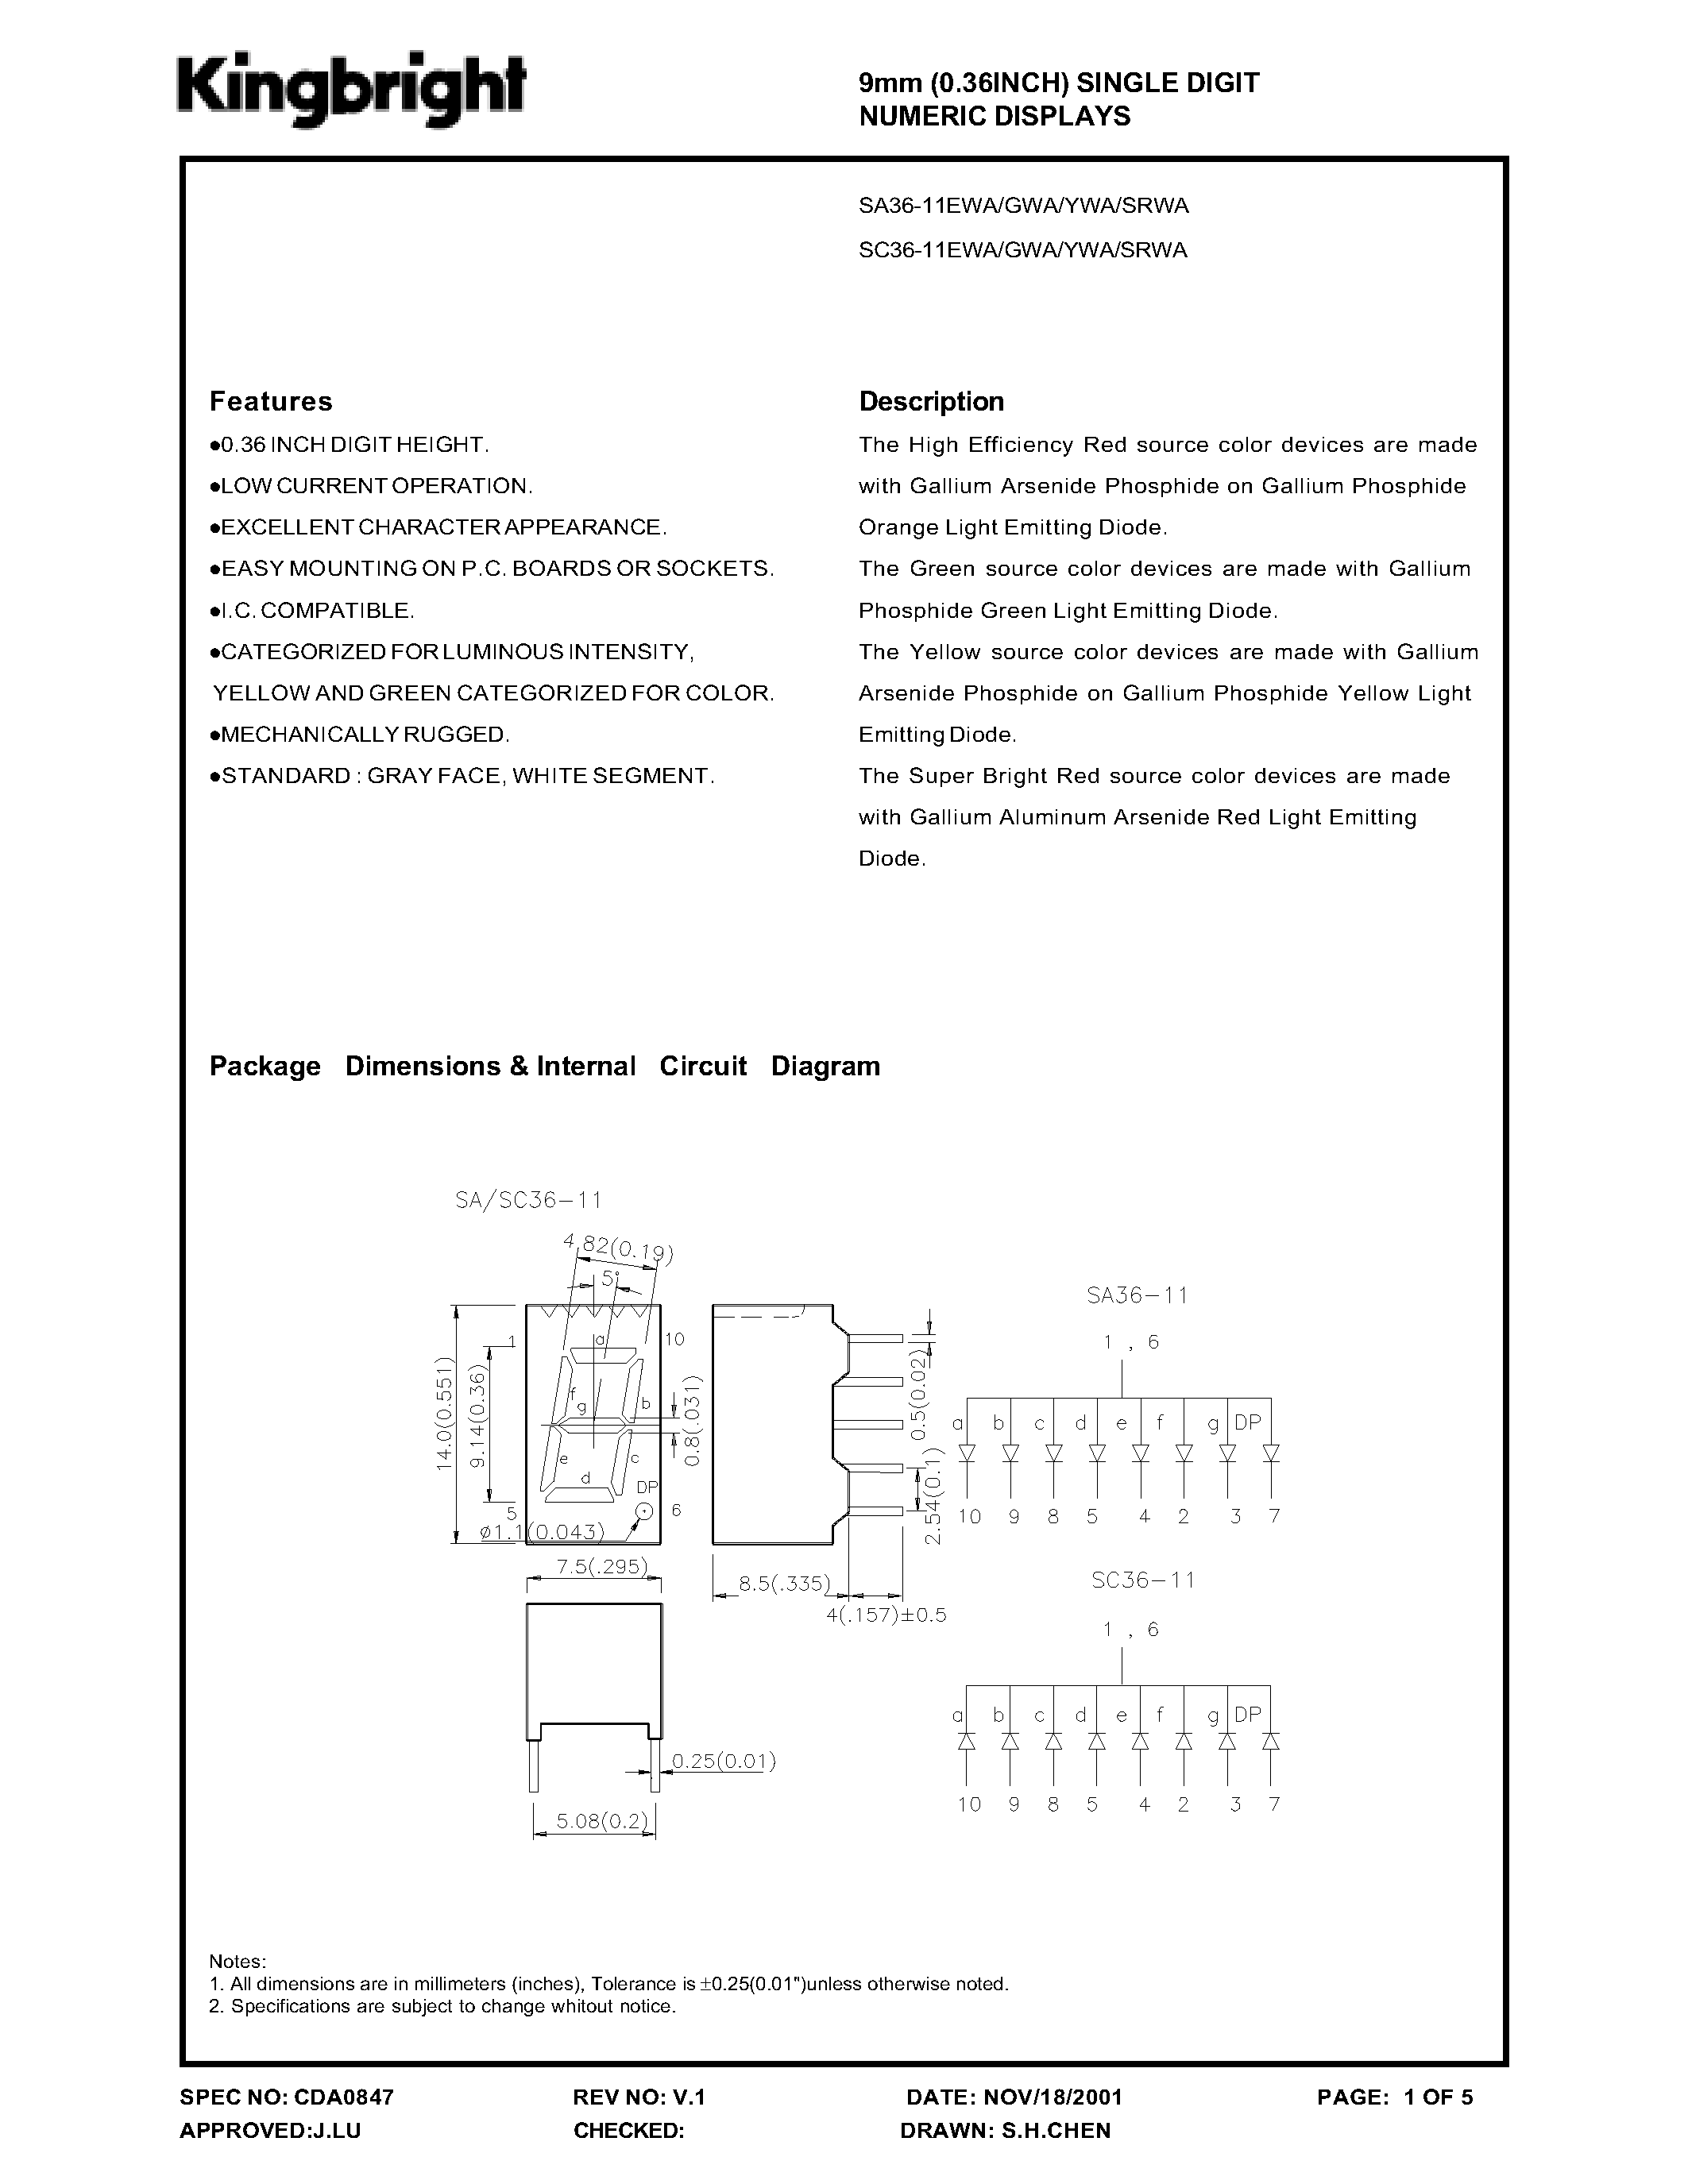 Datasheet SA36-11 - 9mm(0.36INCH) SINGLE DIGIT NUMERIC DISPLAYS page 1